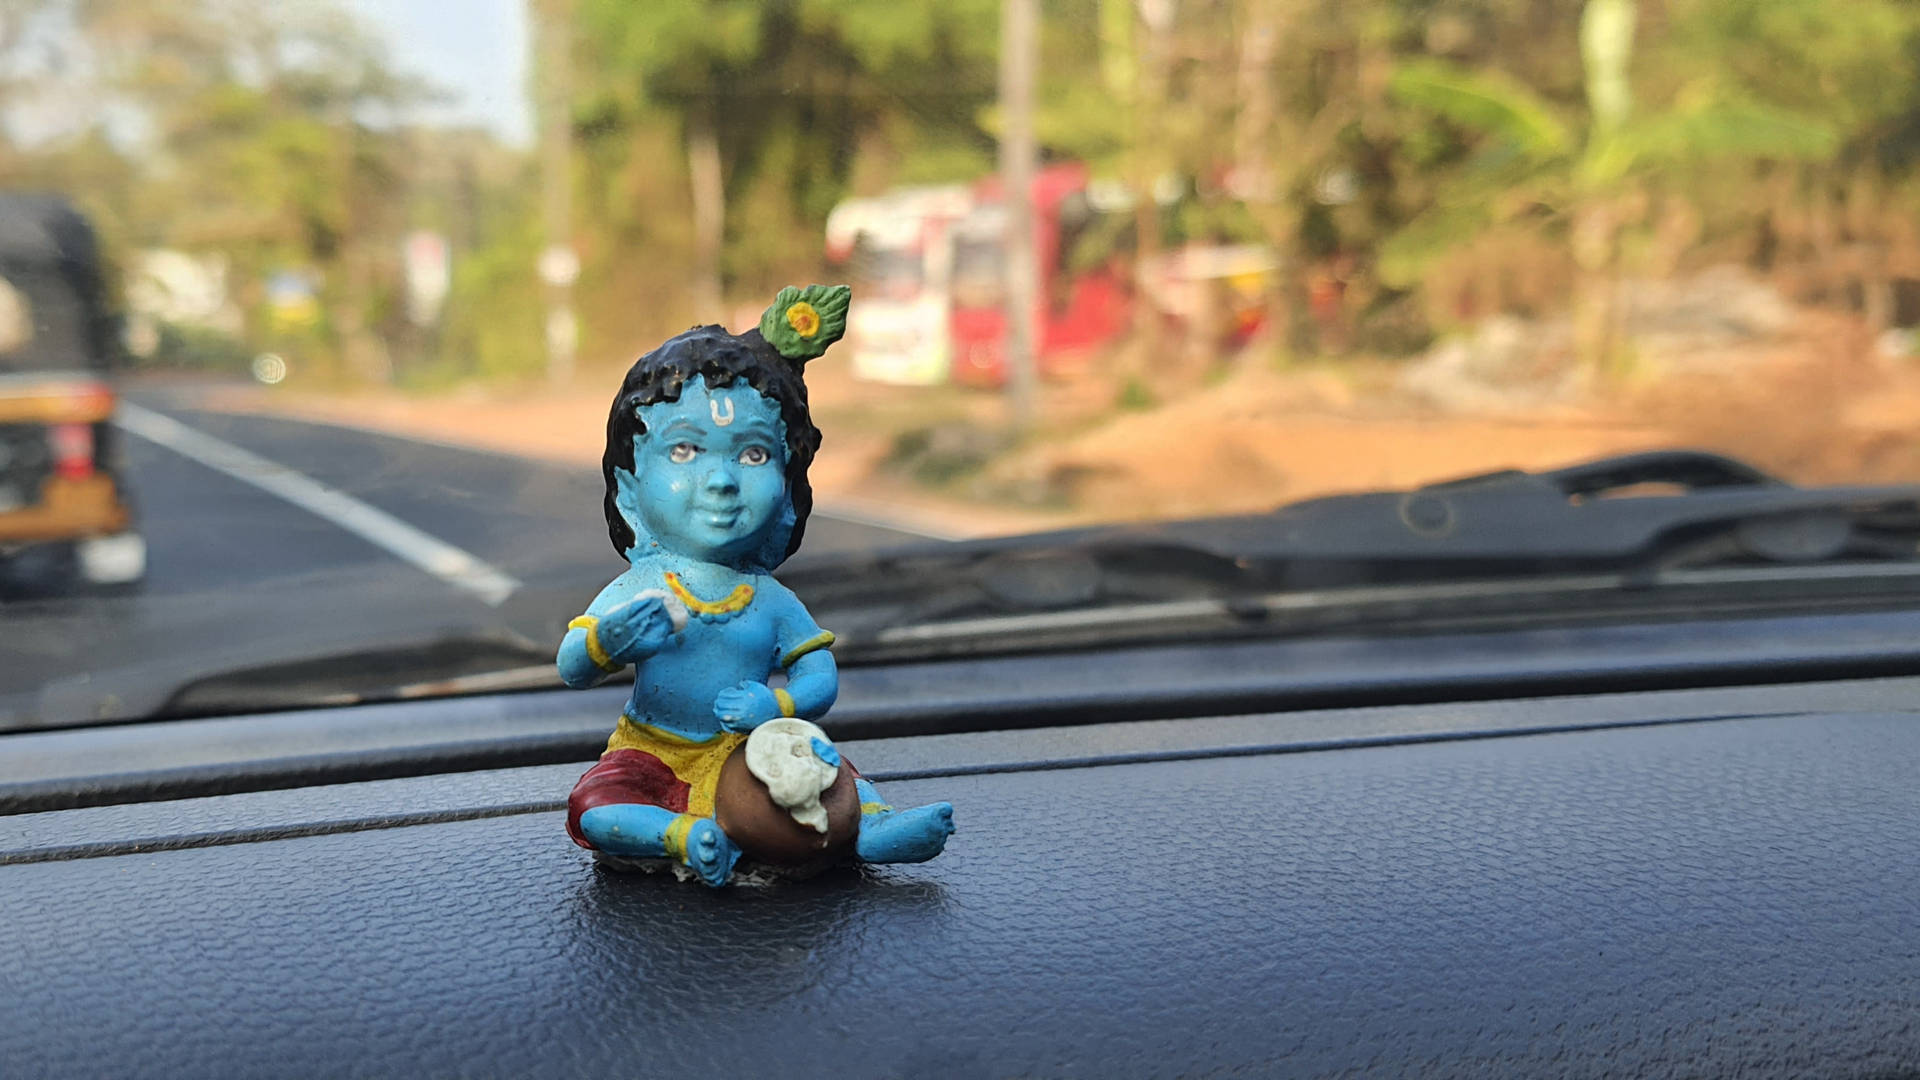 Figurine Of Baby Krishna 4k Wallpaper